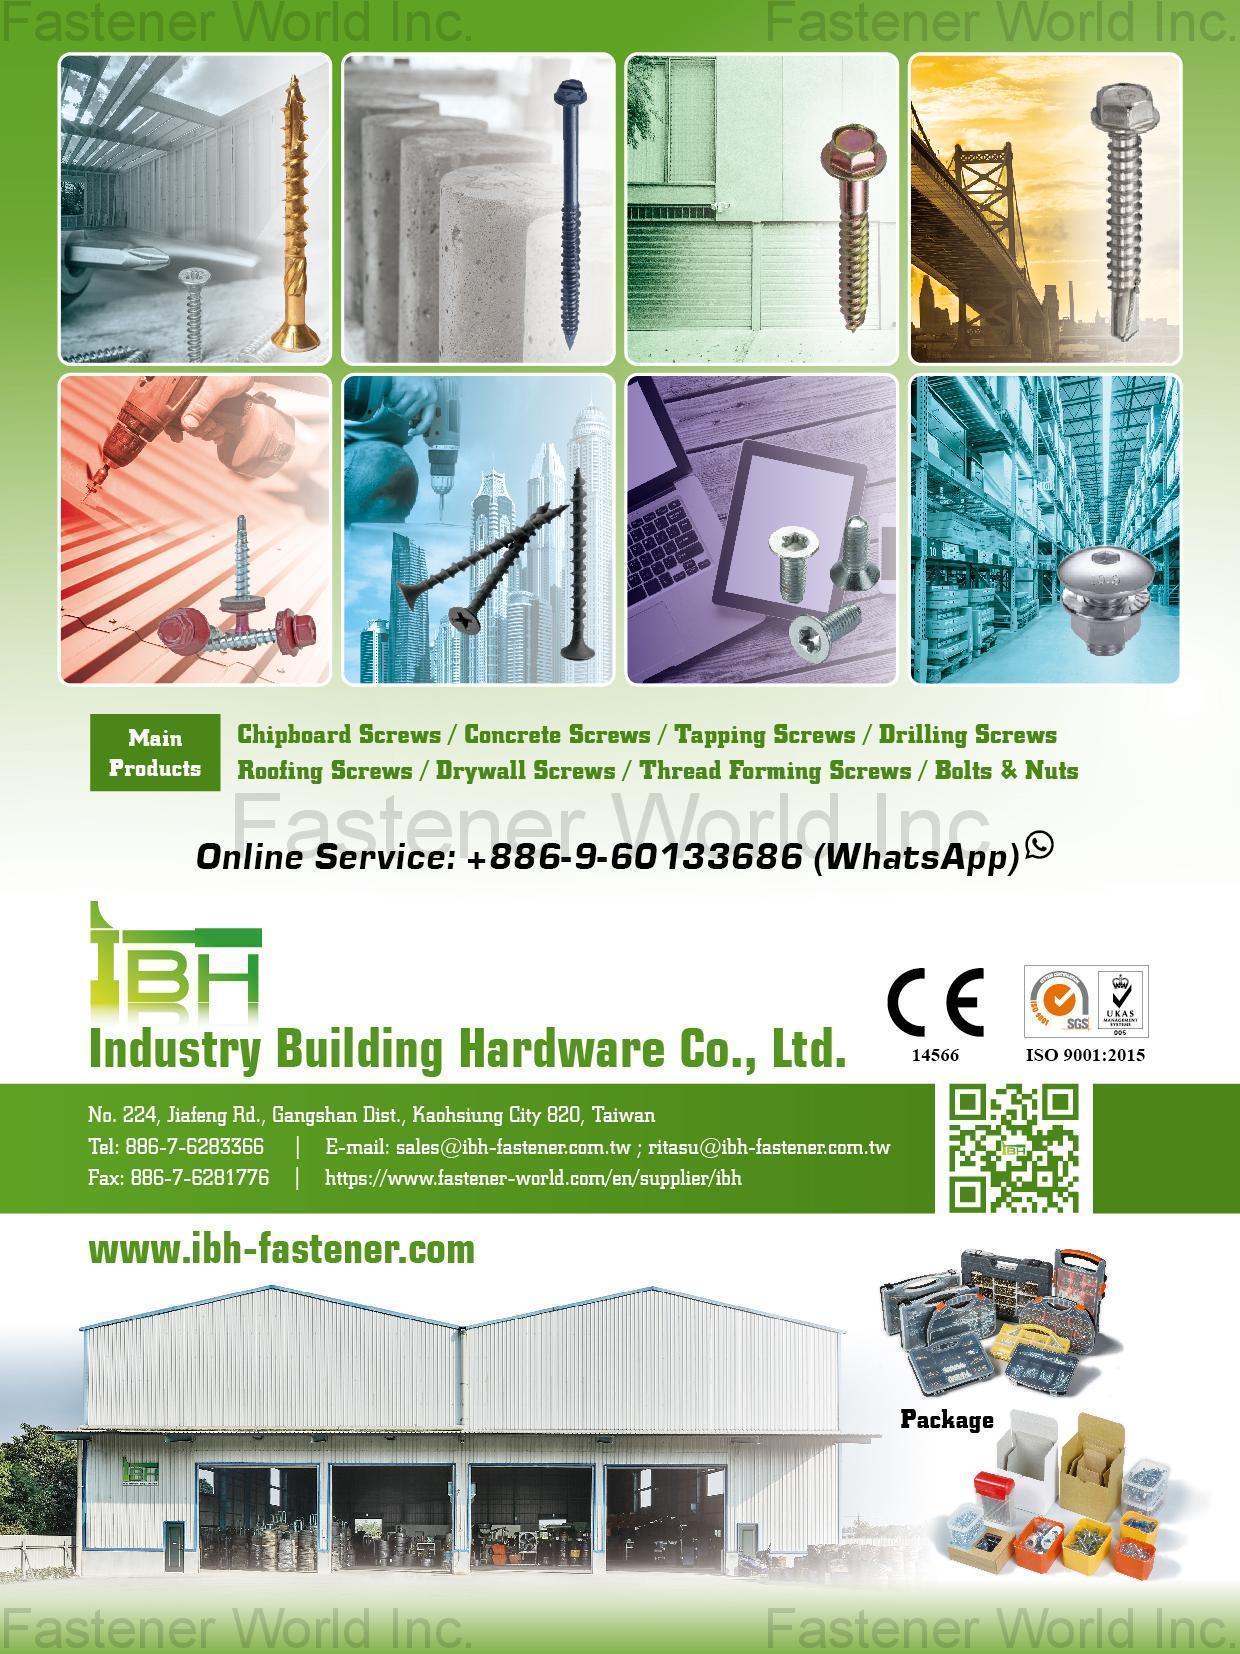 INDUSTRY BUILDING HARDWARE CO., LTD. , Chipboard Screws, Concrete Screws, Tapping Screws, Drilling Screws, Roofing Screws, Drywall Screws, Thread Forming Screws, Bolts & Nuts